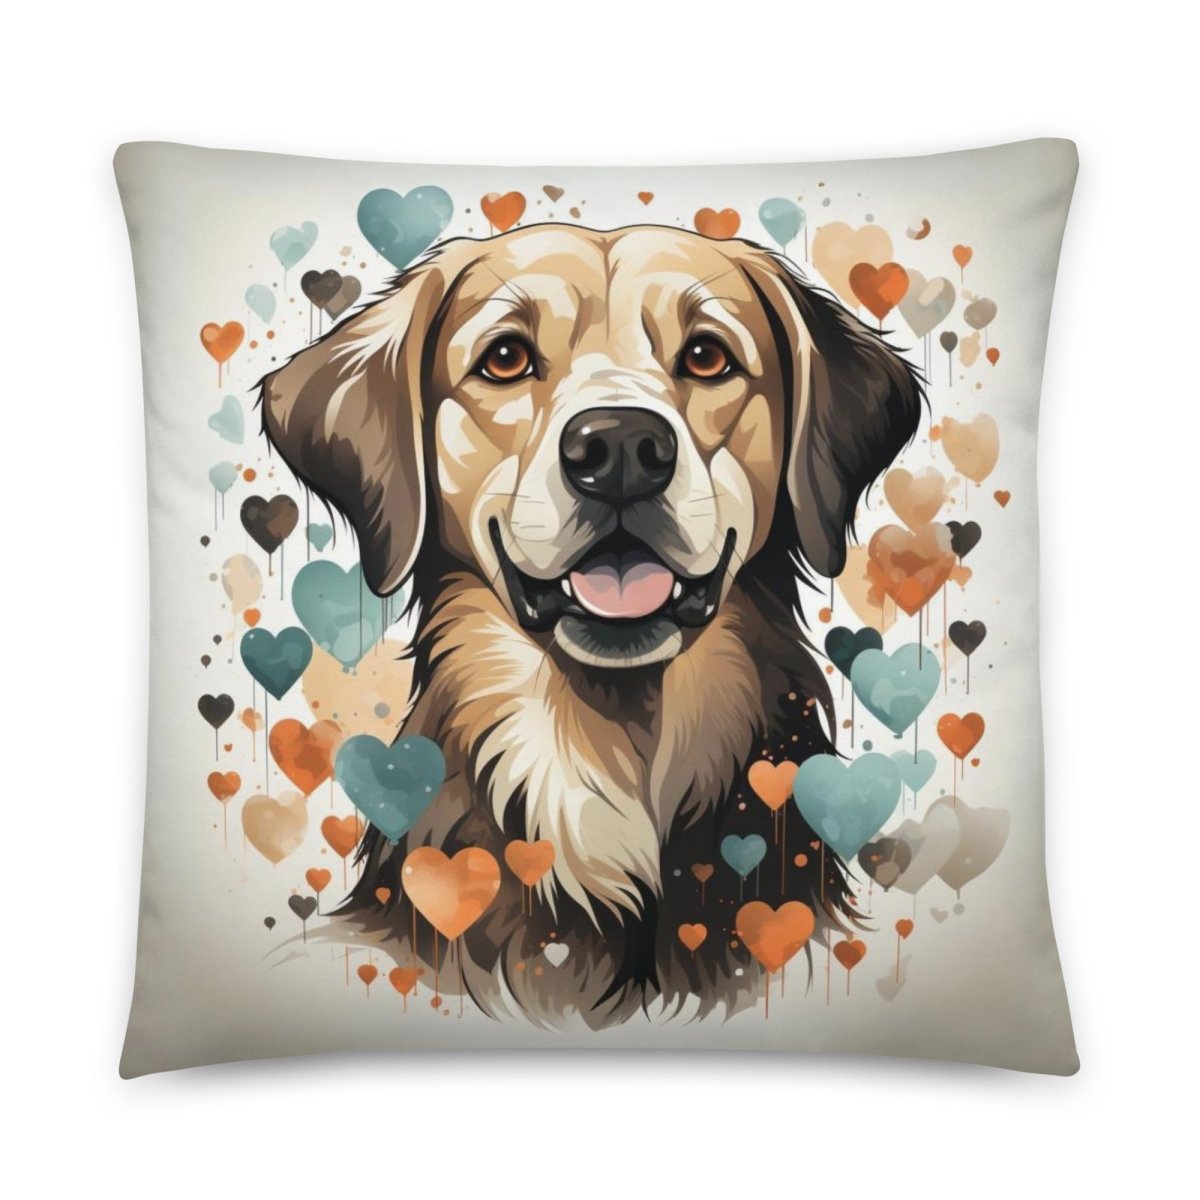 Labrador Love Portrait Throw Pillow - Funny Nikko